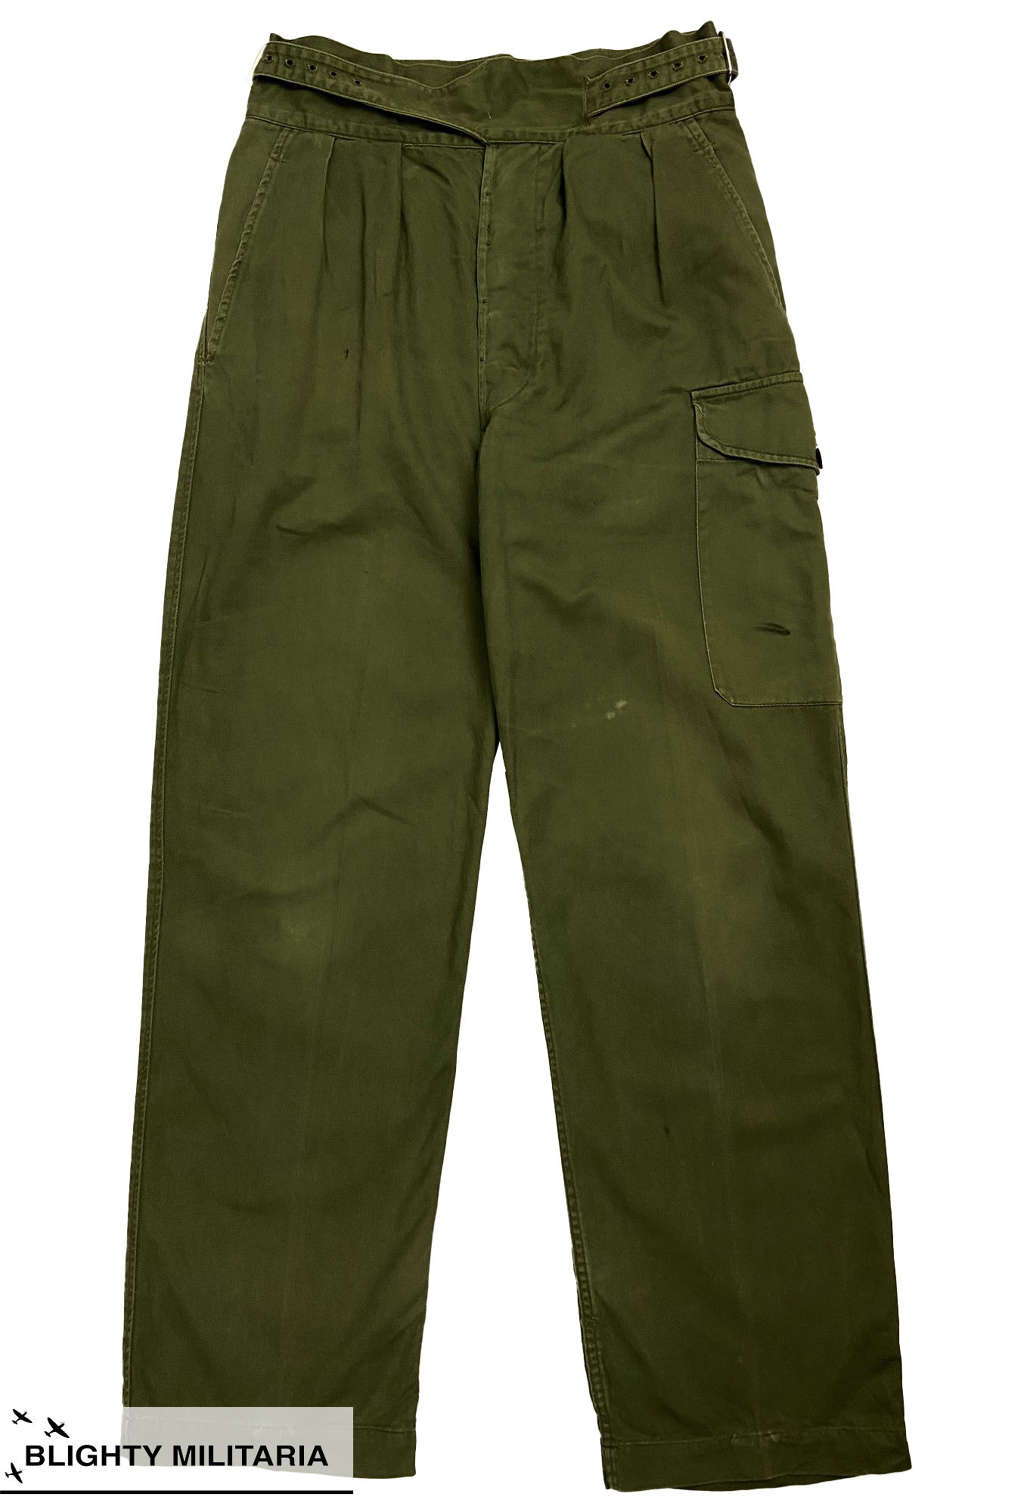 Original 1970s 1950 Pattern Jungle Green Trousers - Size 7